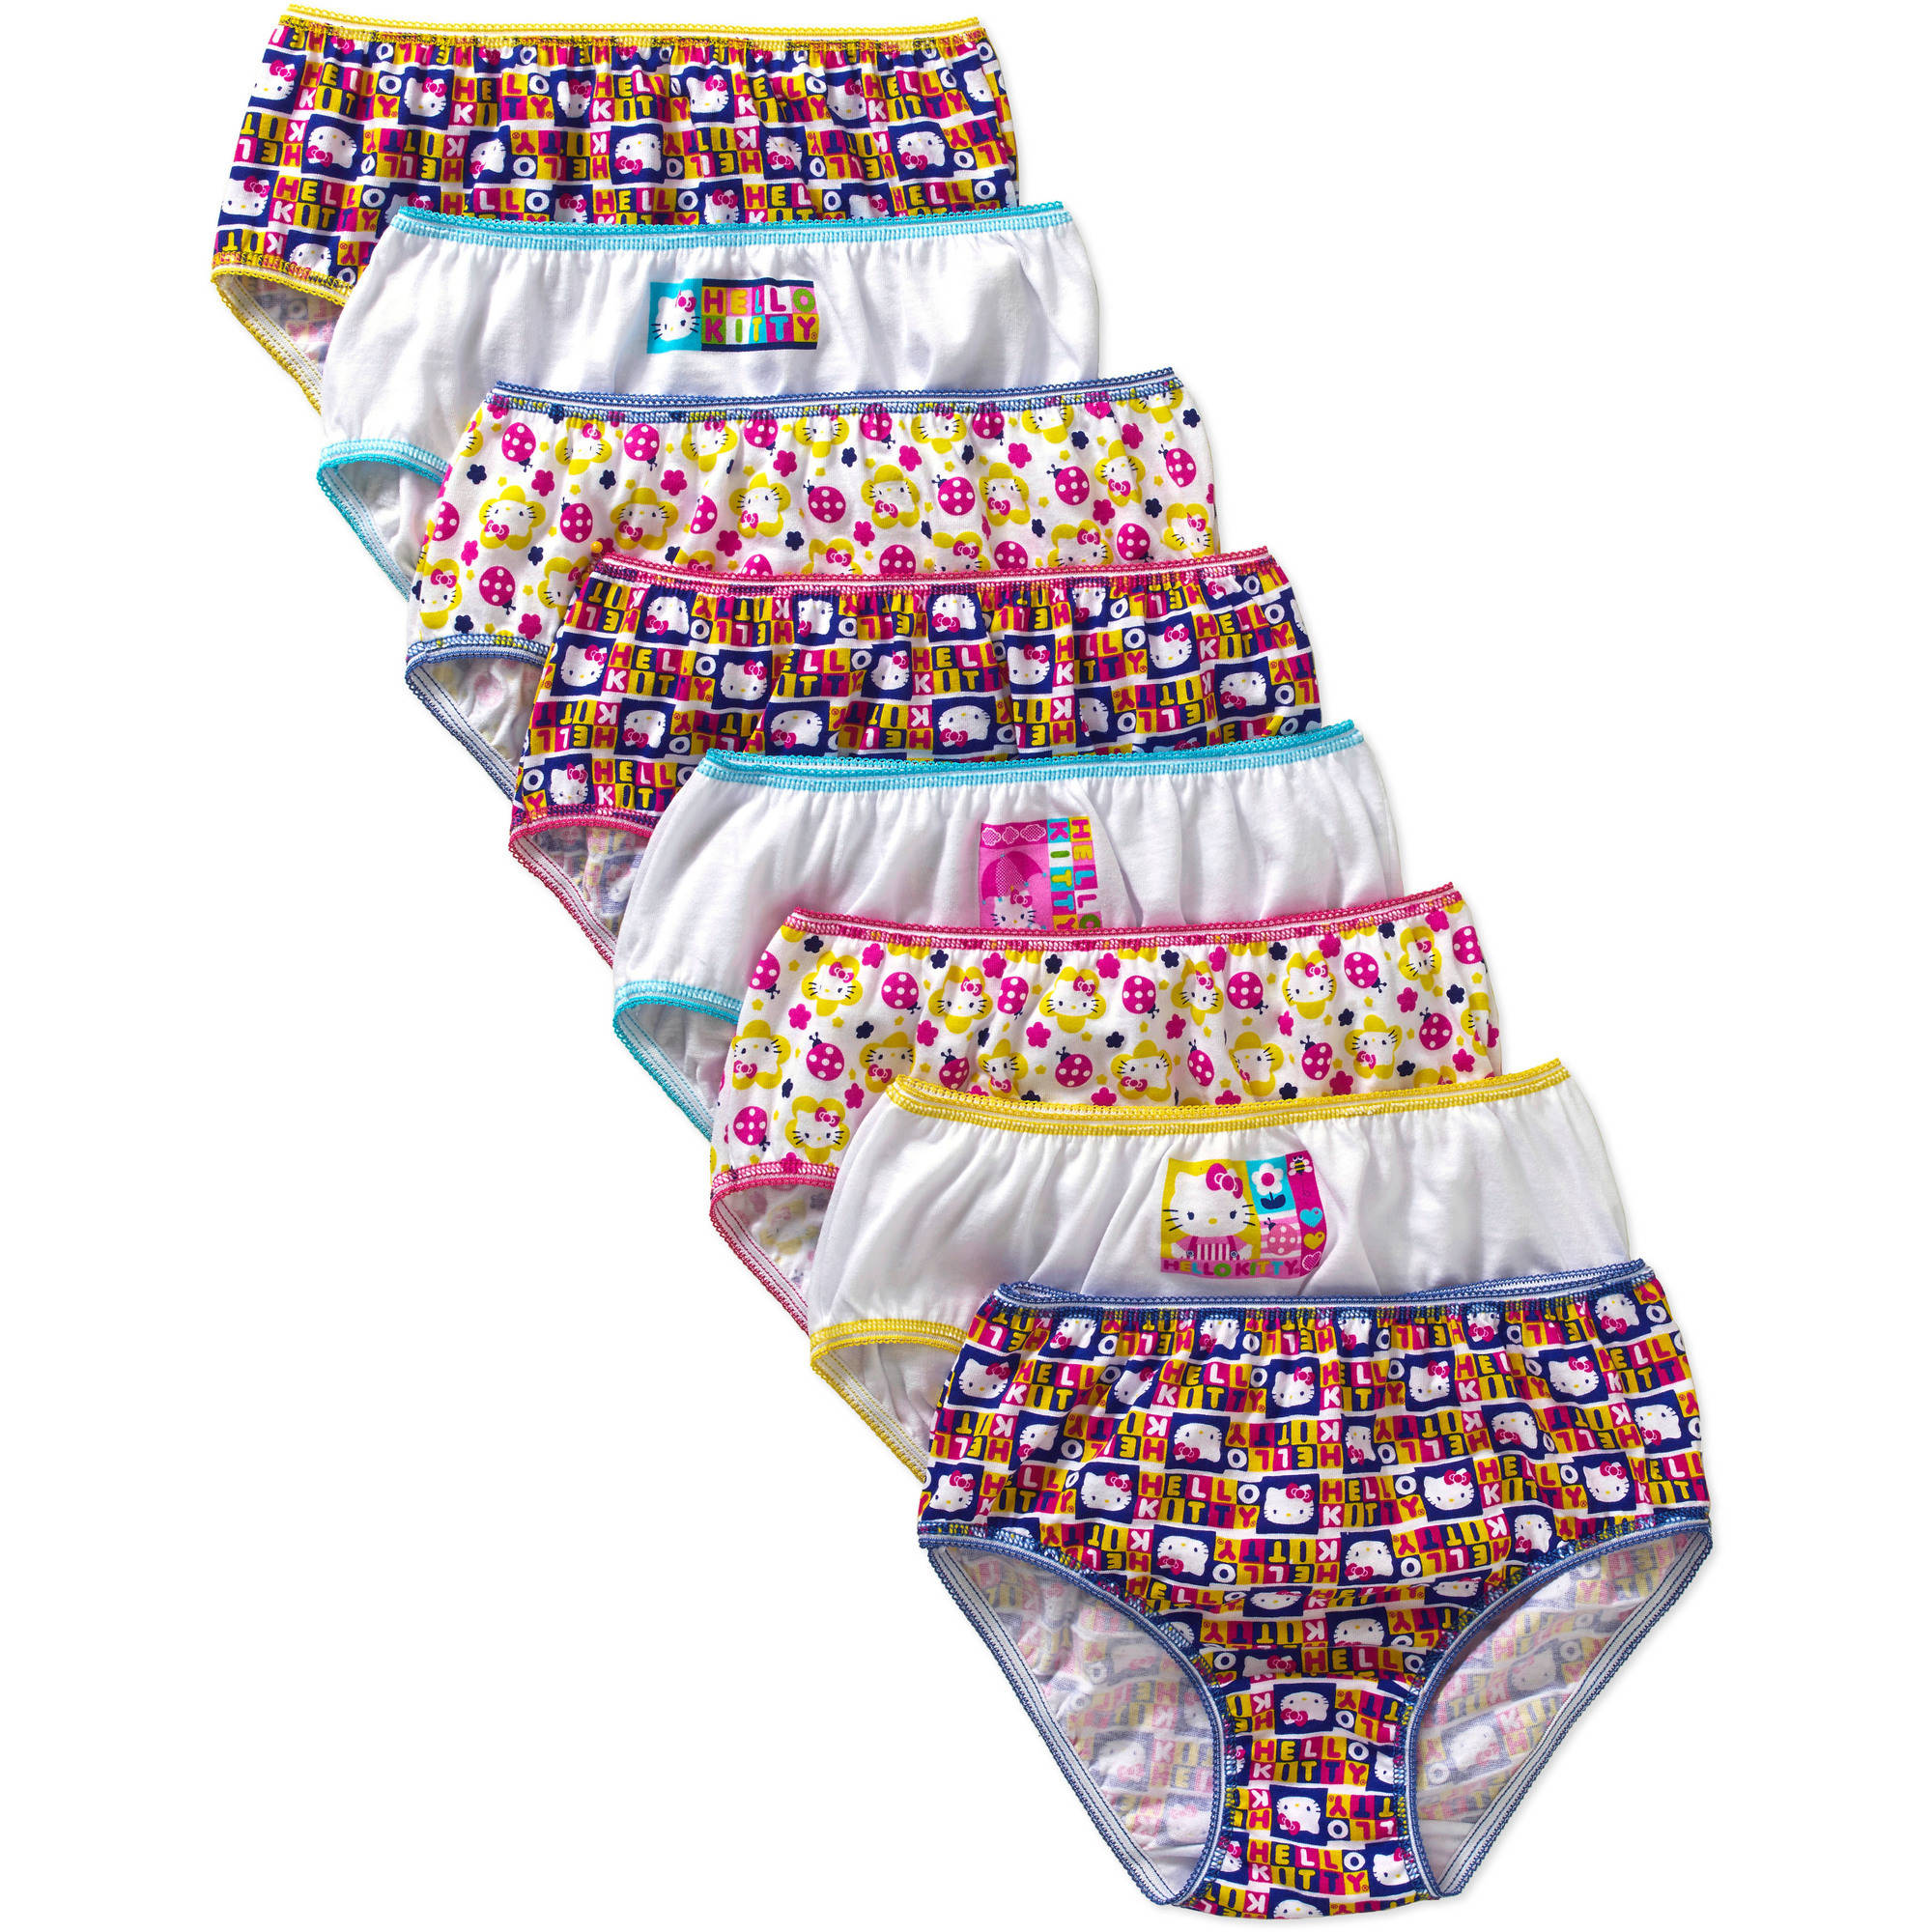 Hello Kitty Girls Brief Underwear, 7+1 Pack Panties (Little Girls & Big Girls) - image 1 of 2